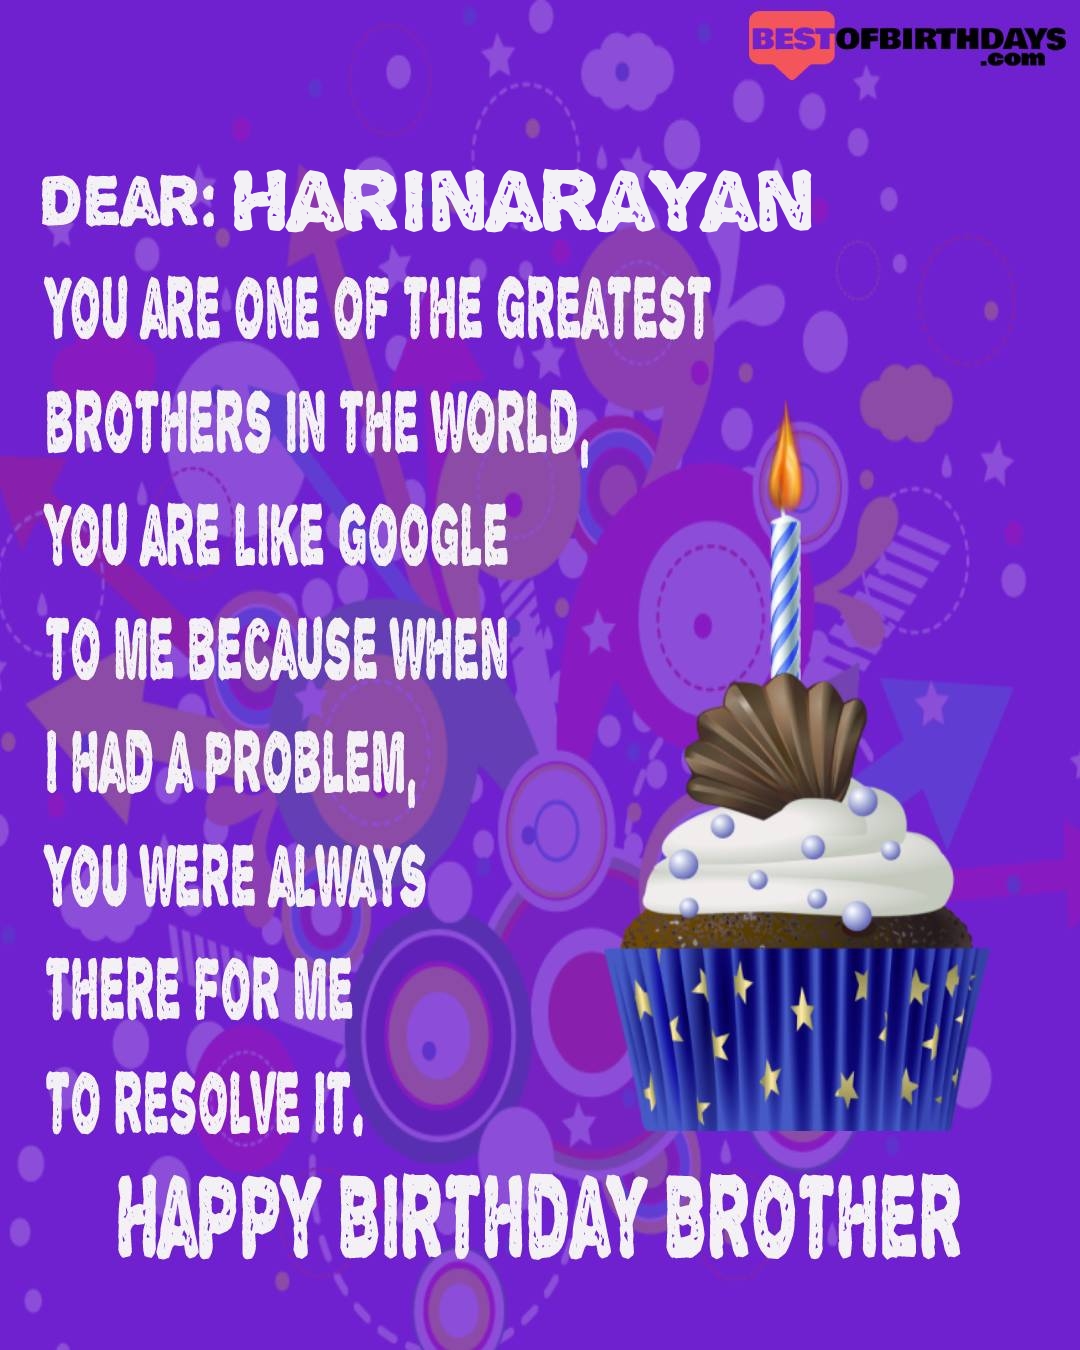 Happy birthday harinarayan bhai brother bro